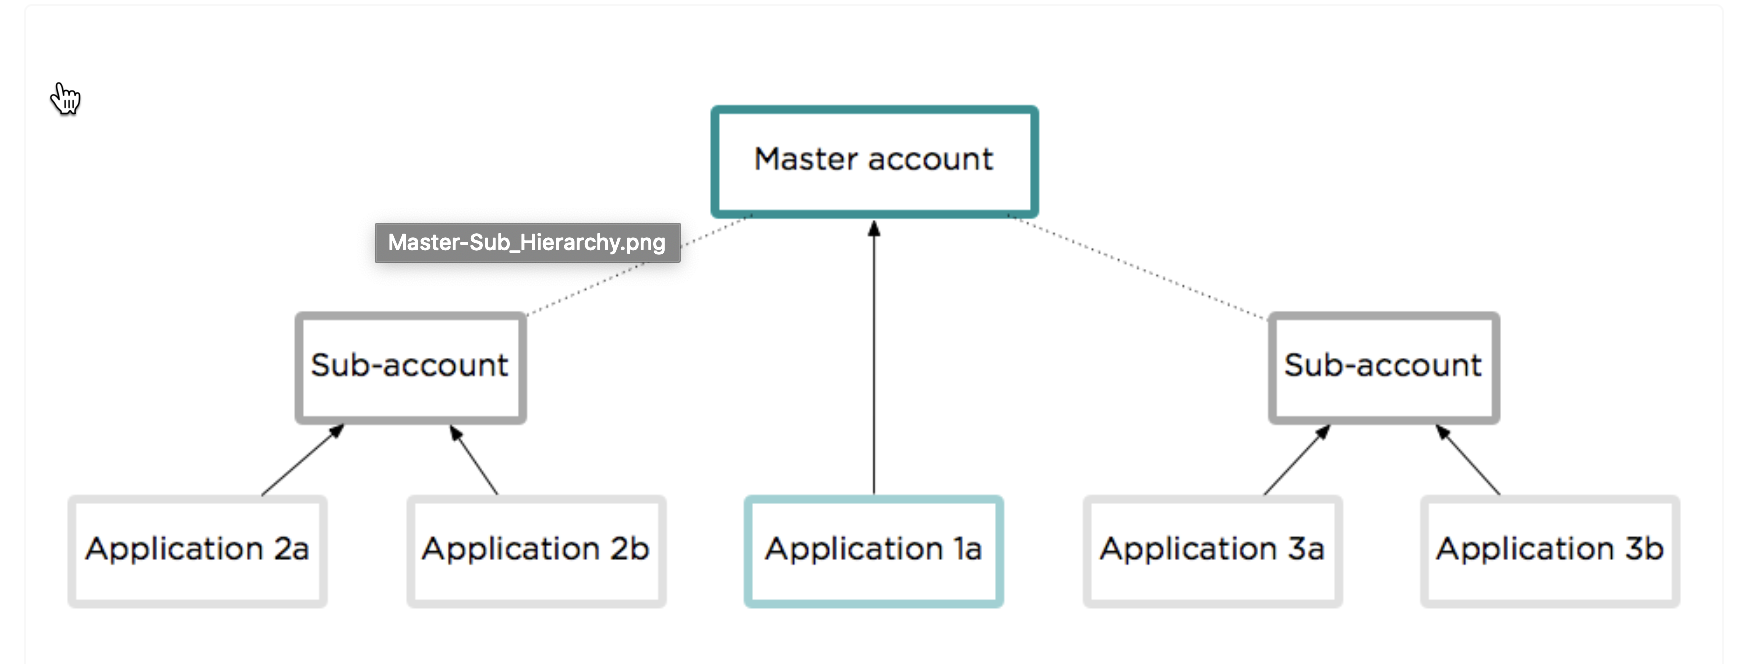 master account hierarchy example